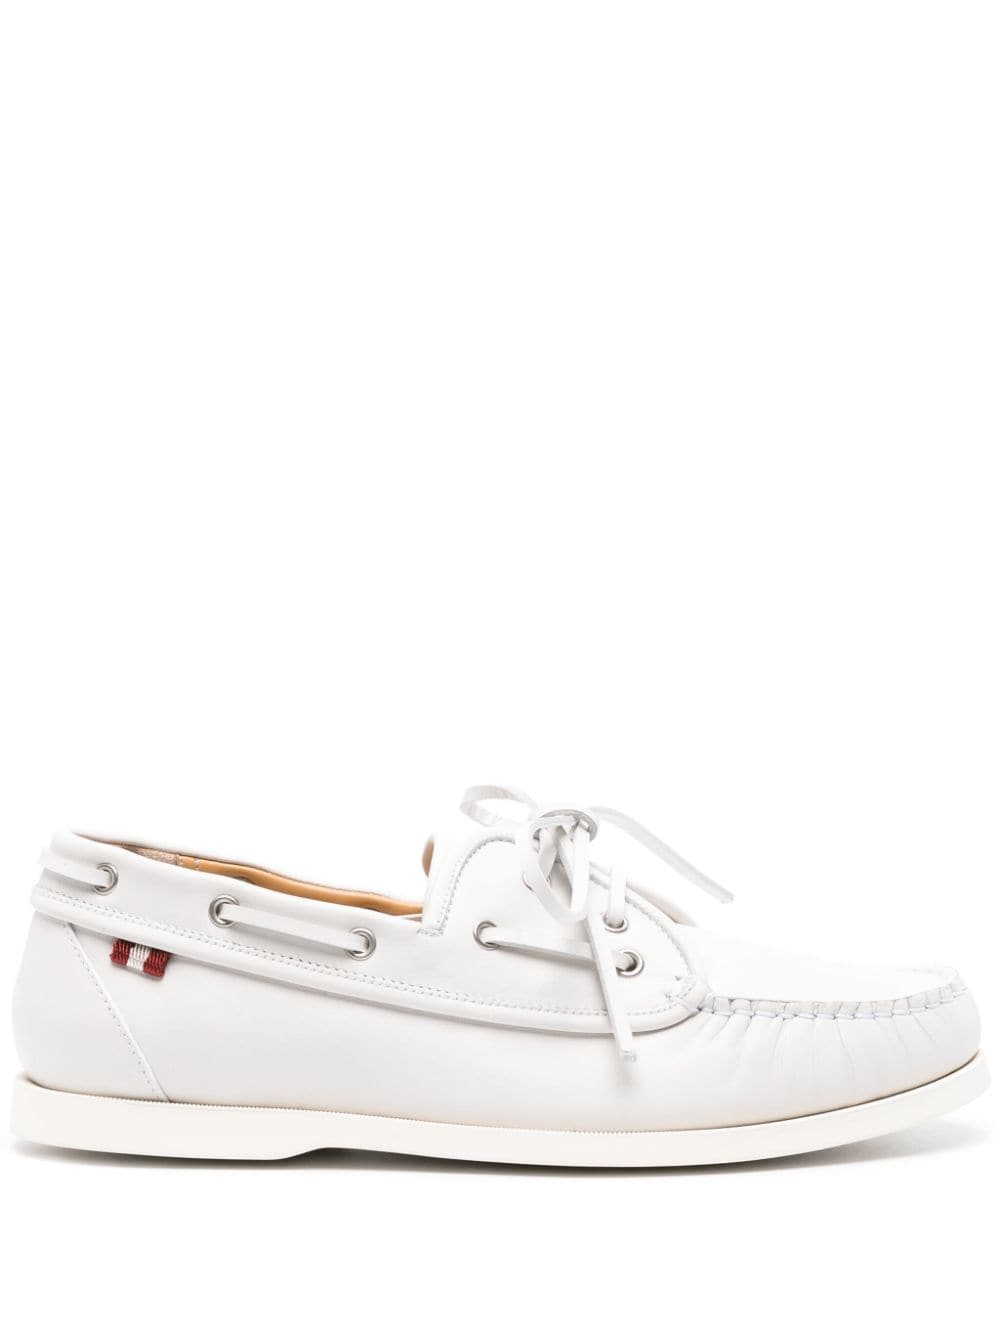 Bally Nabry leather boat shoes White